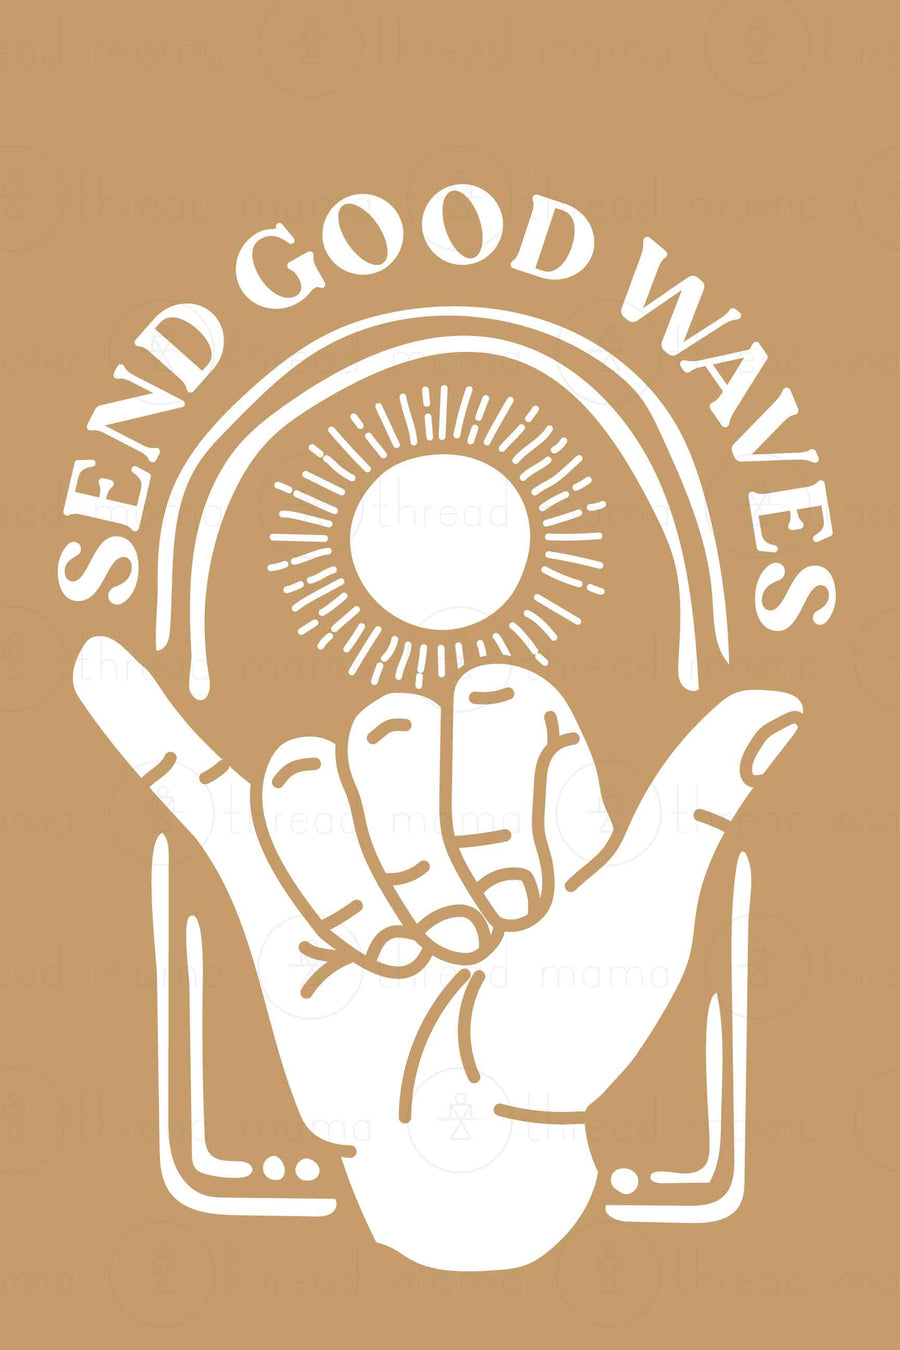 Send Good Waves Collection (Printable Poster)